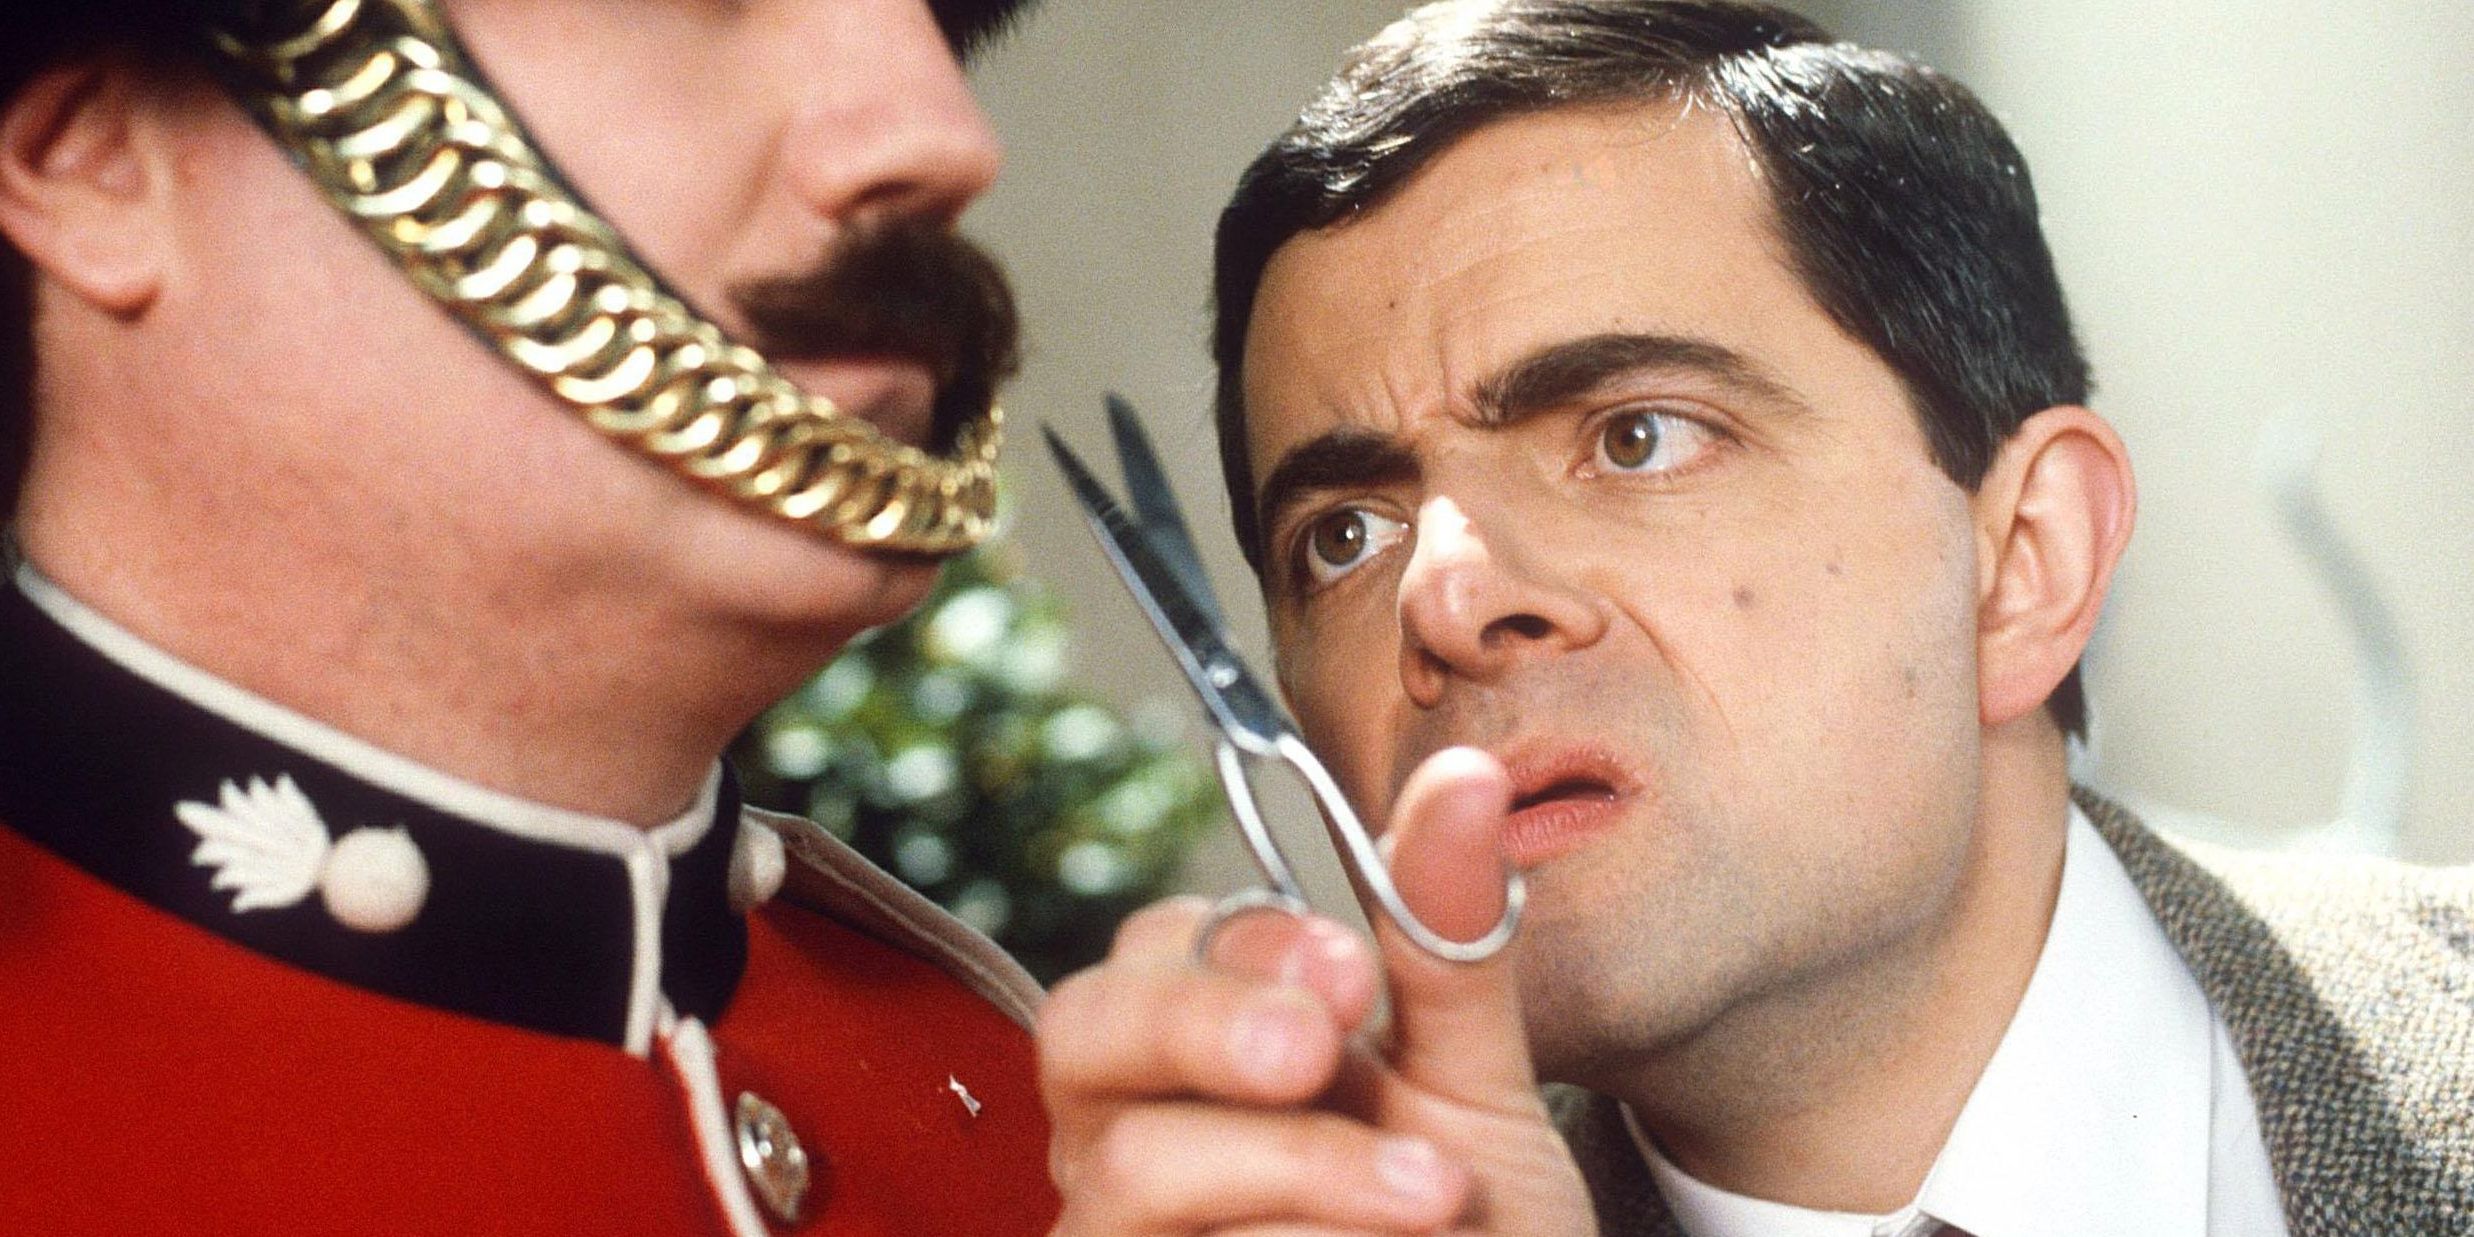 Mr. Bean trims a guard's mustache in Bean.